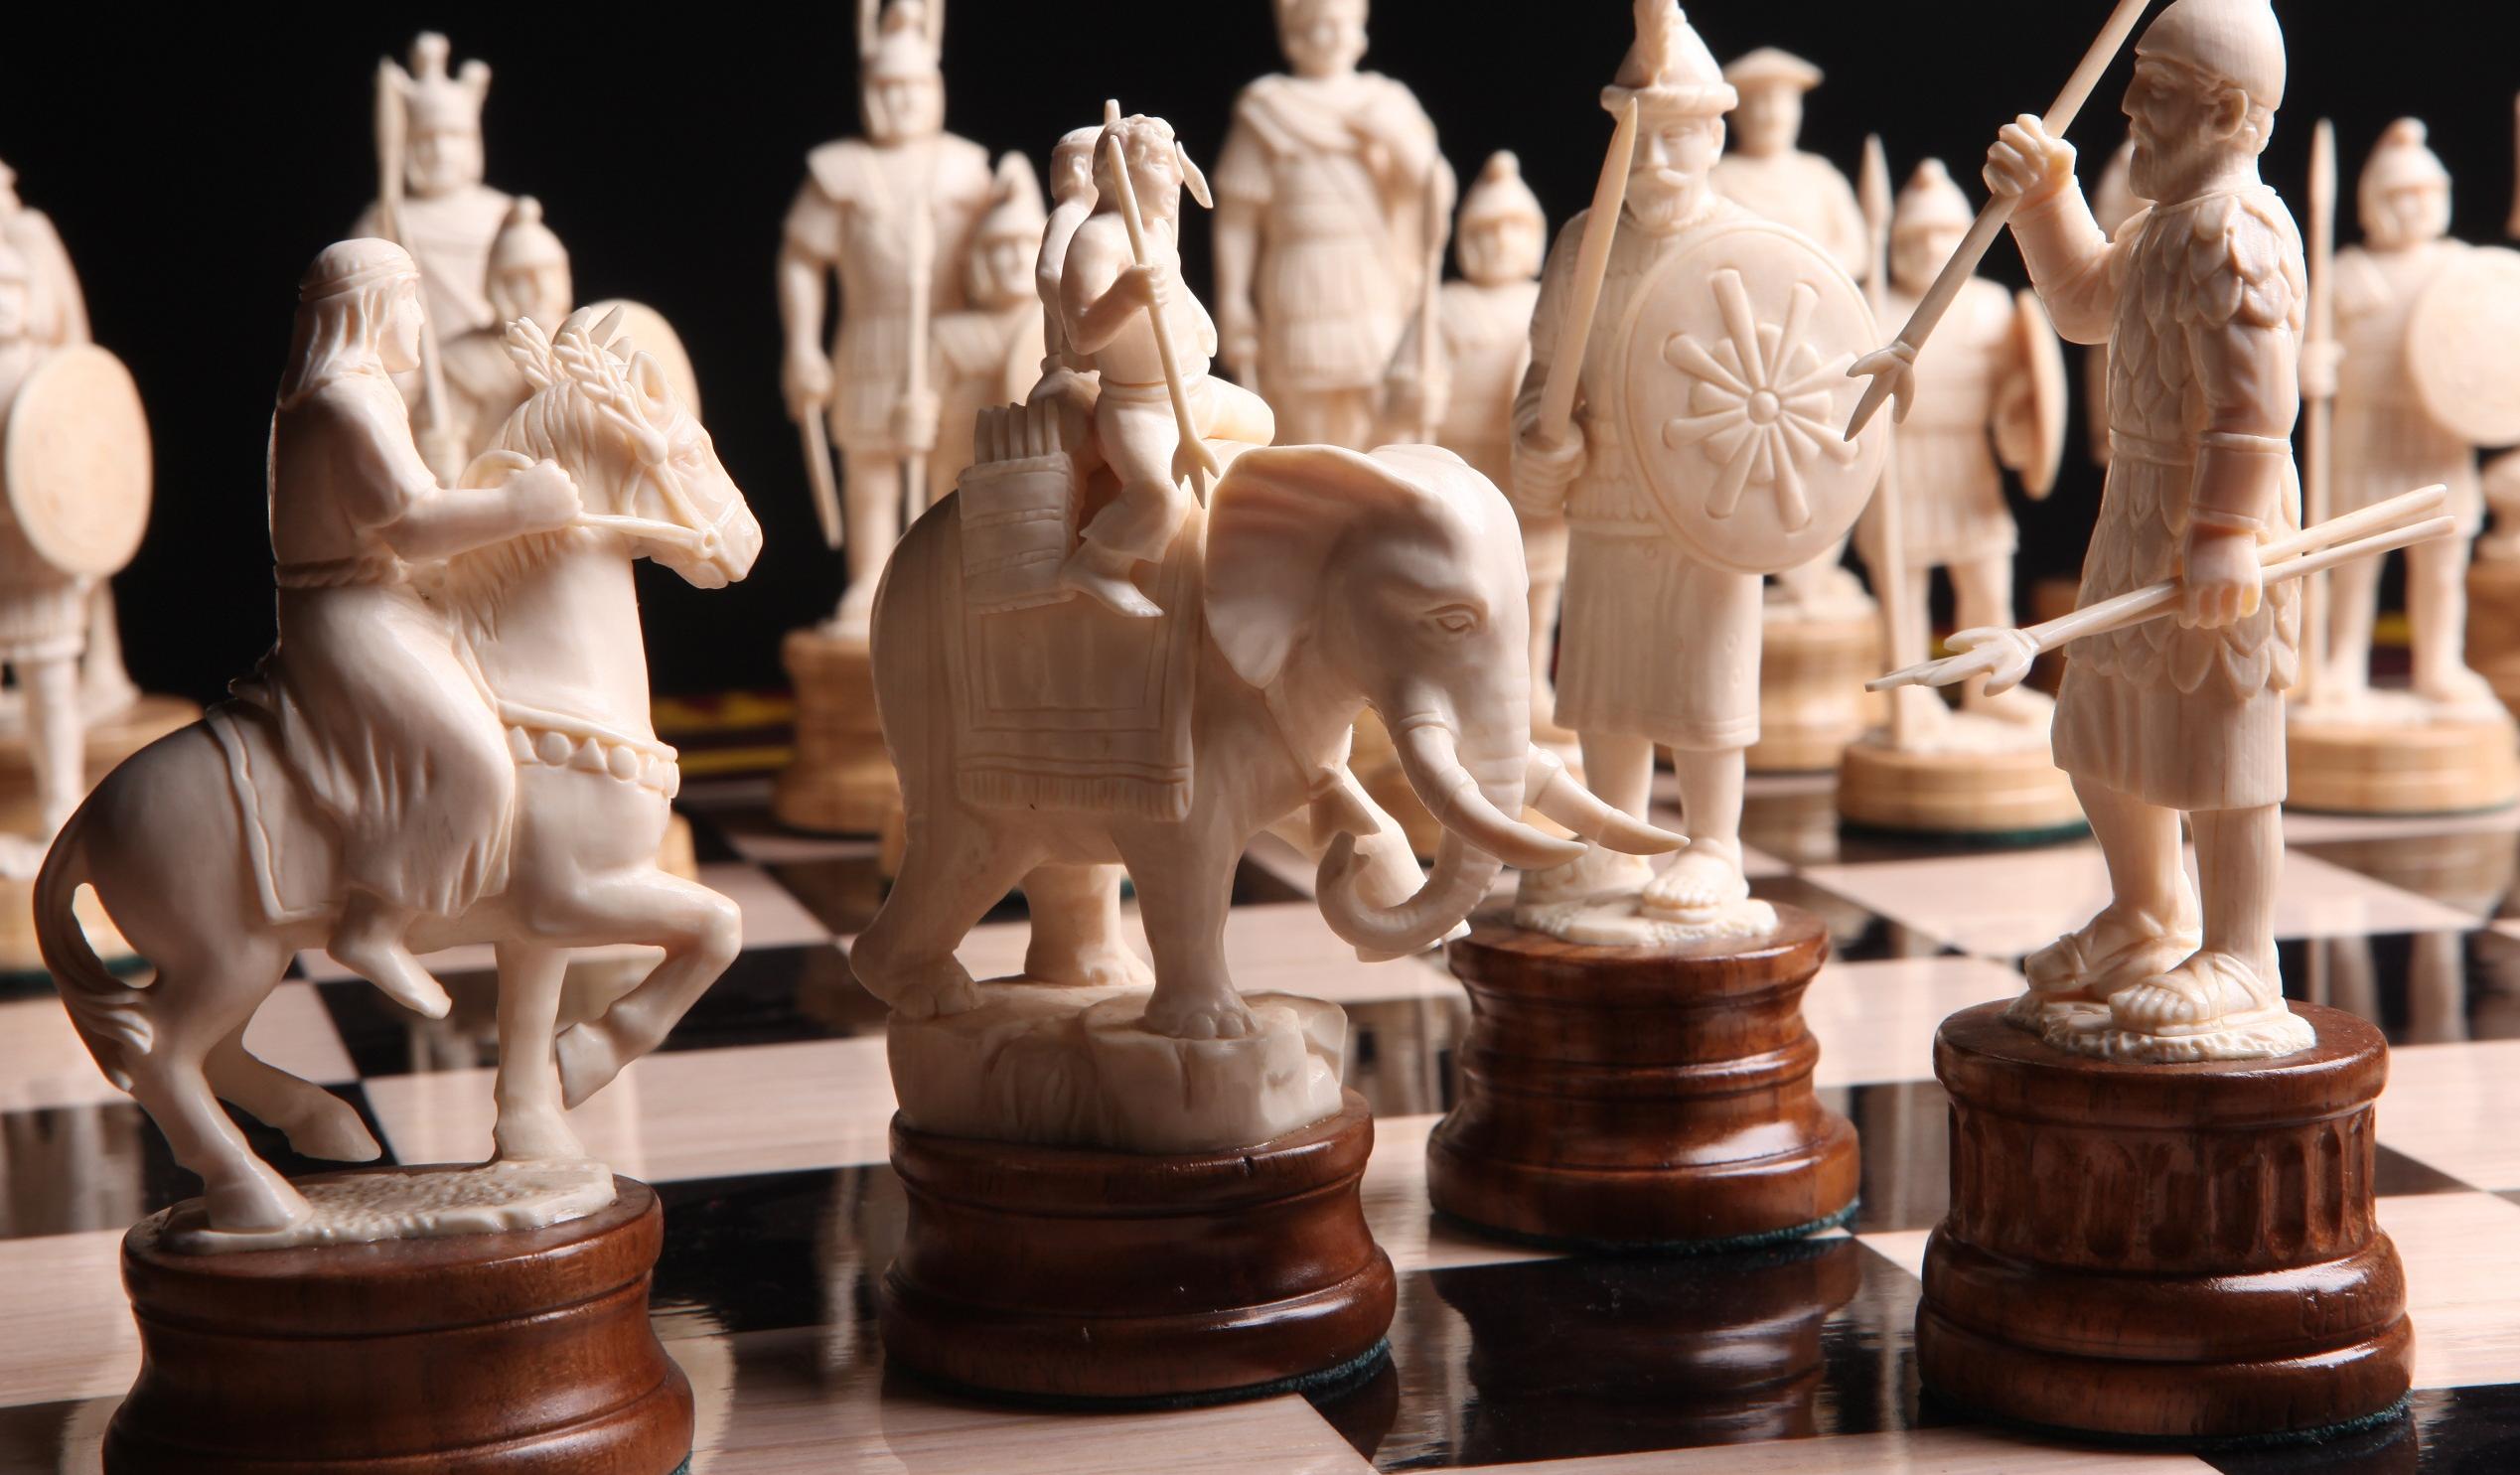 Шахматы в древности. Древние шахматы чатуранга. Индийские шахматы чатуранга. Шахматы Персия. Шахматы в древней Индии.